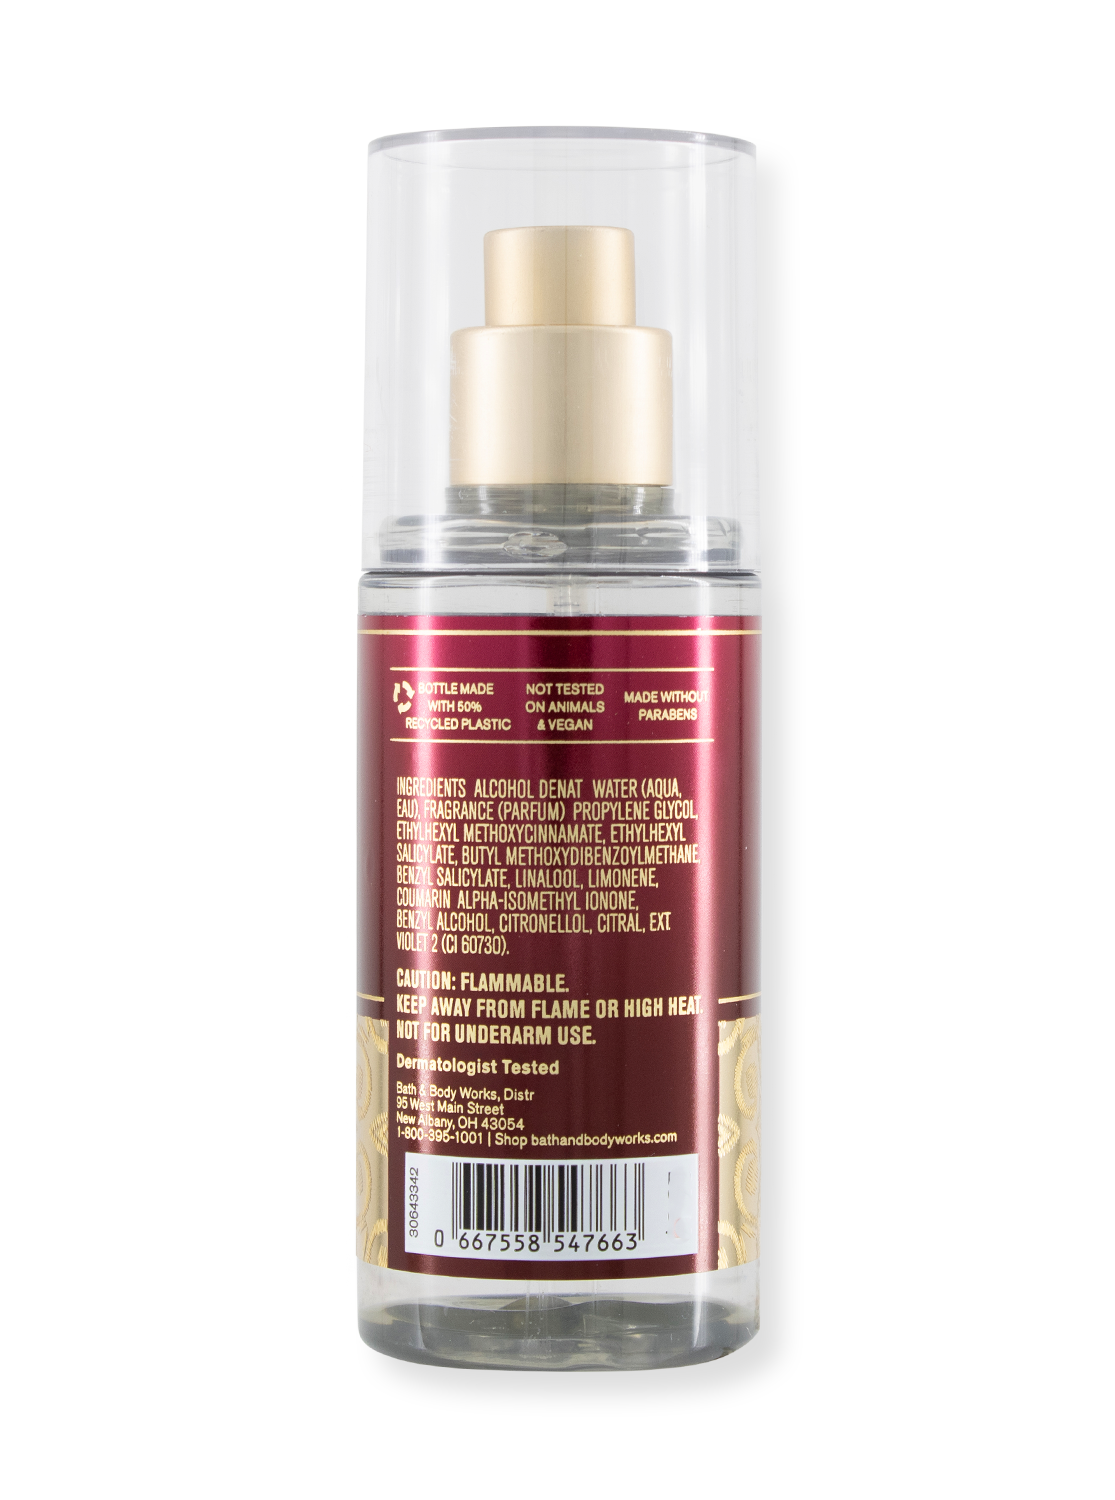 Spray corporel - Lumineux (taille du voyage) - 75 ml